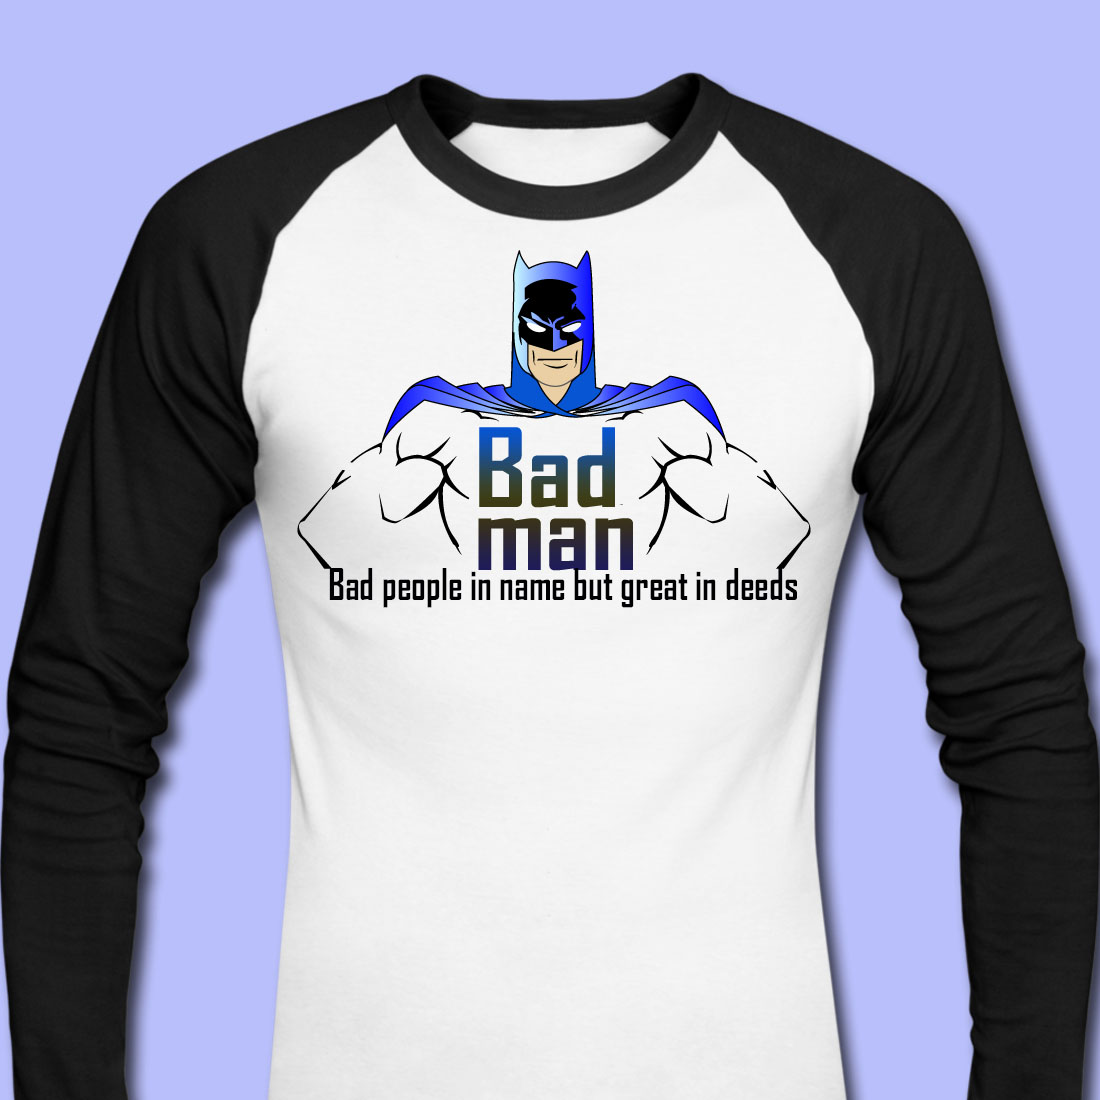 Bedman t-shirt design preview image.